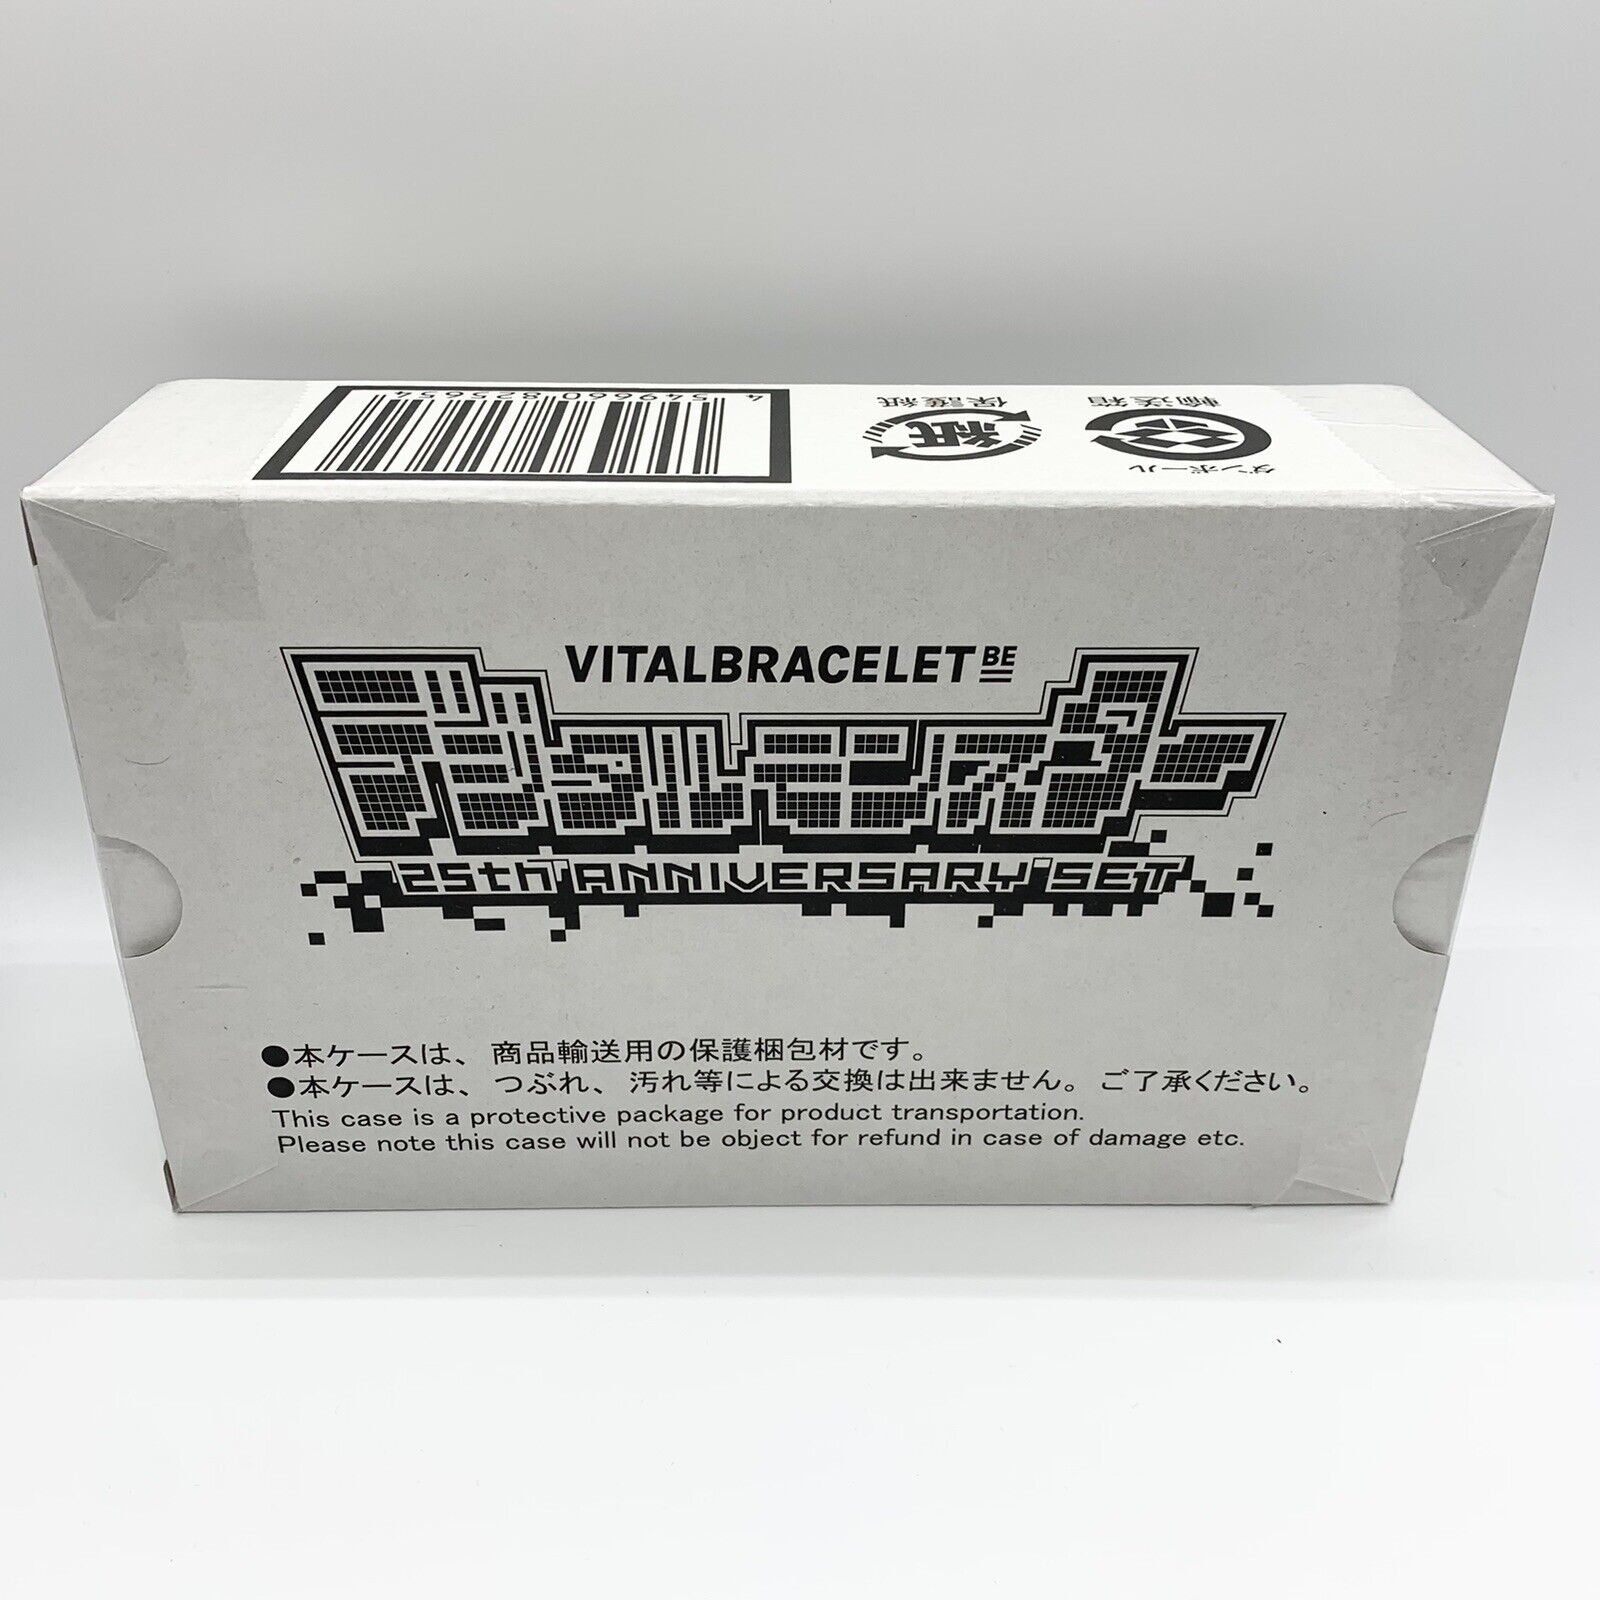 Bandai Vital Bracelet BE Digital Monster Digimon 25th Anniversary Set Limited